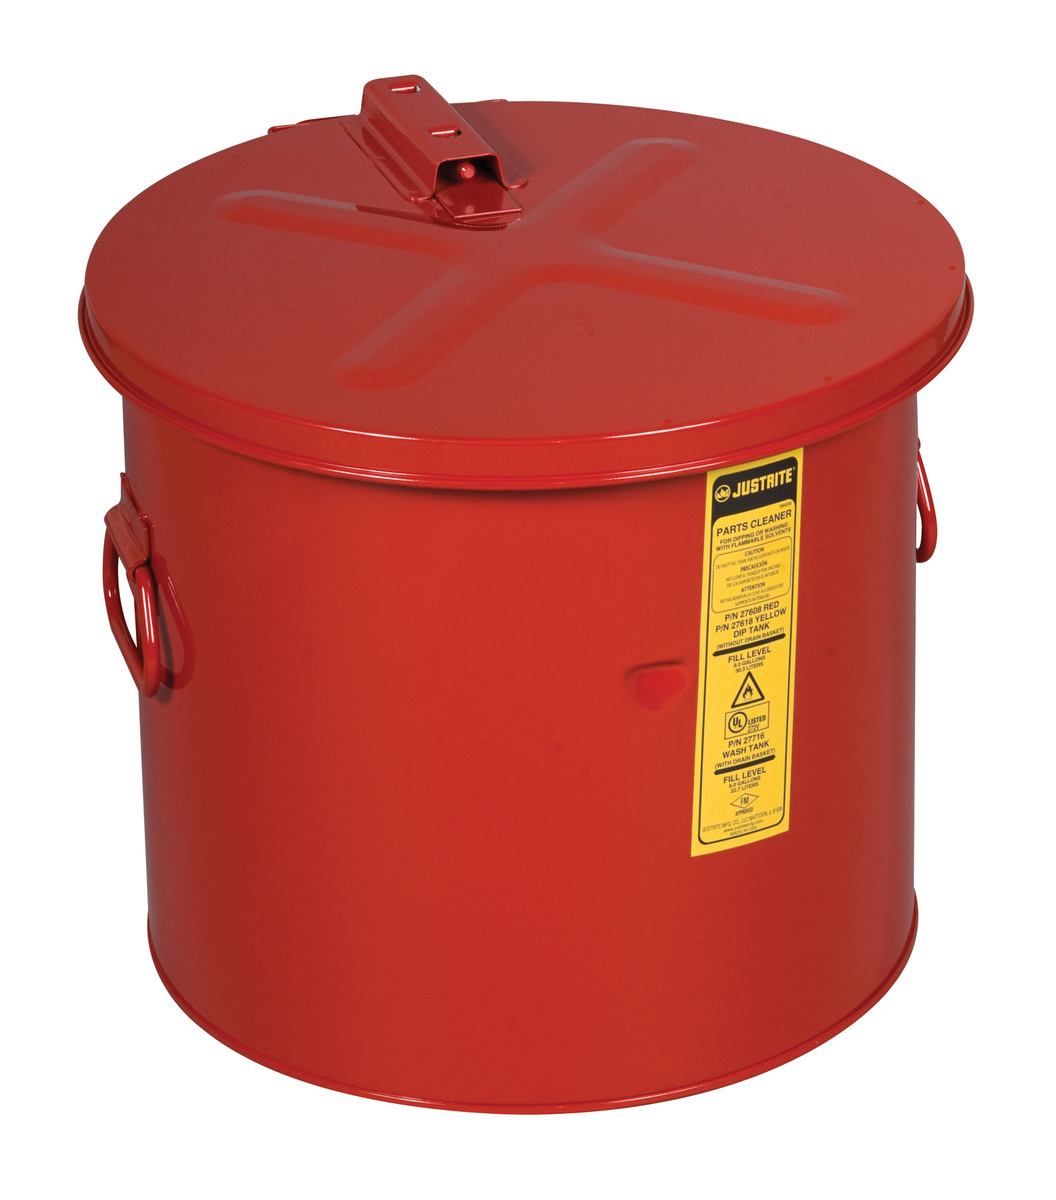 Justrite™ 8 Gallon Red Galvanized Steel Benchtop Dip Tank (For Hazardous Liquids)